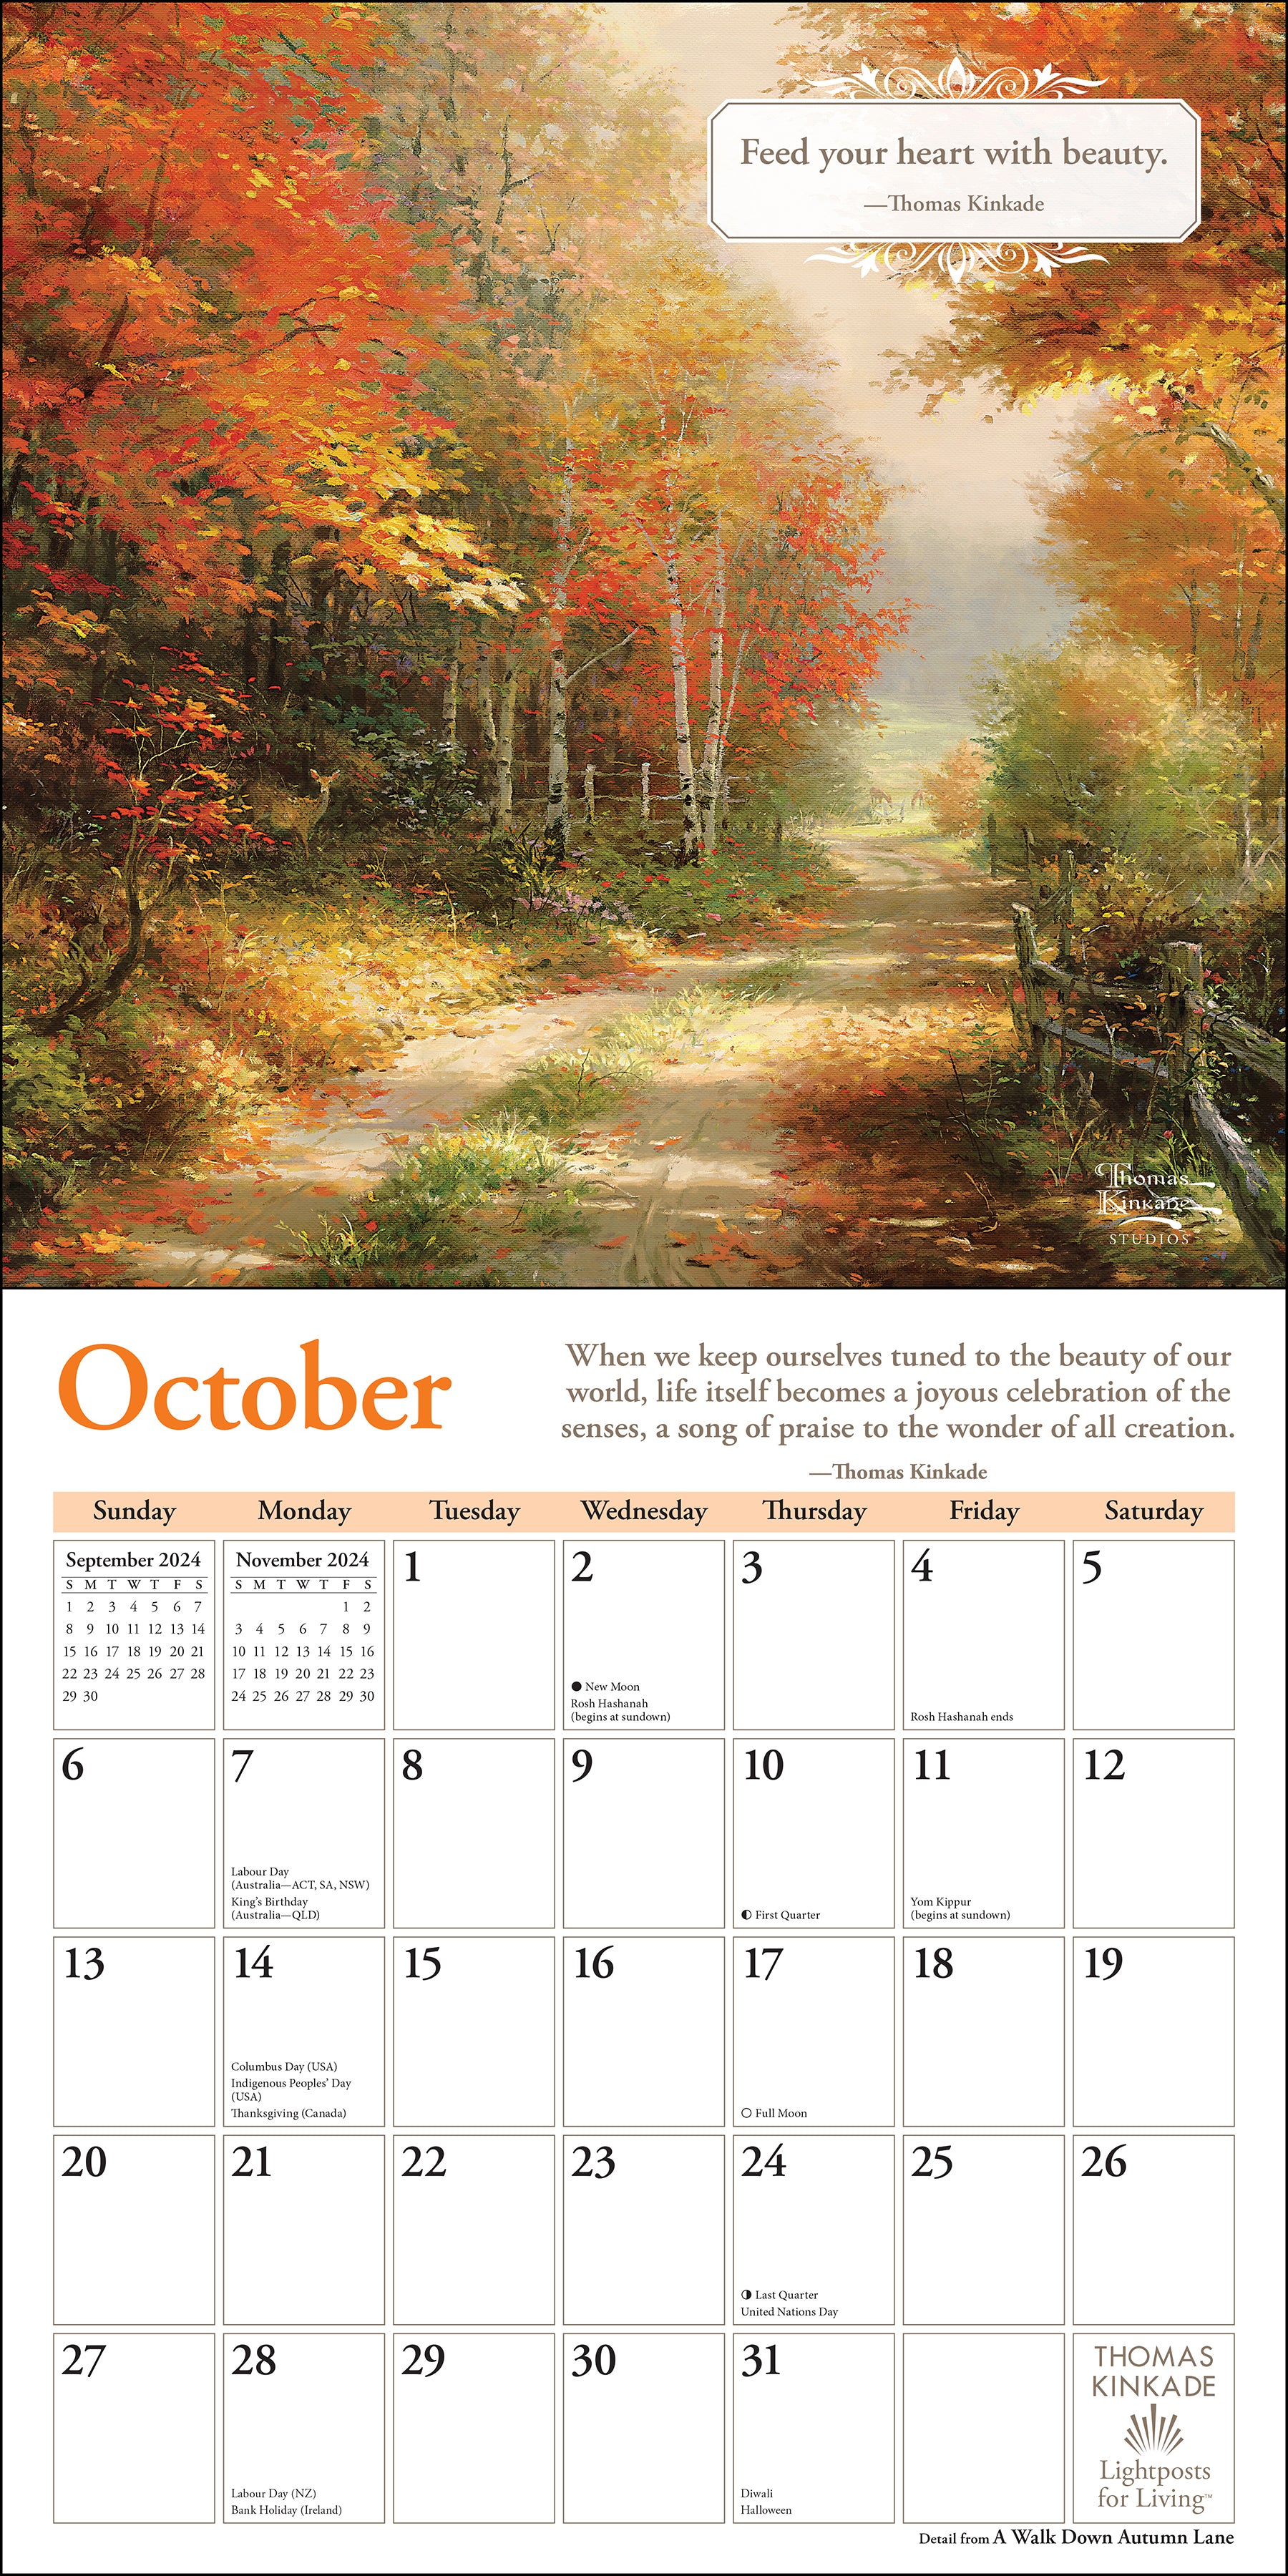 Sept, Oct, and Nov Variant & Spotlight Release Dates 